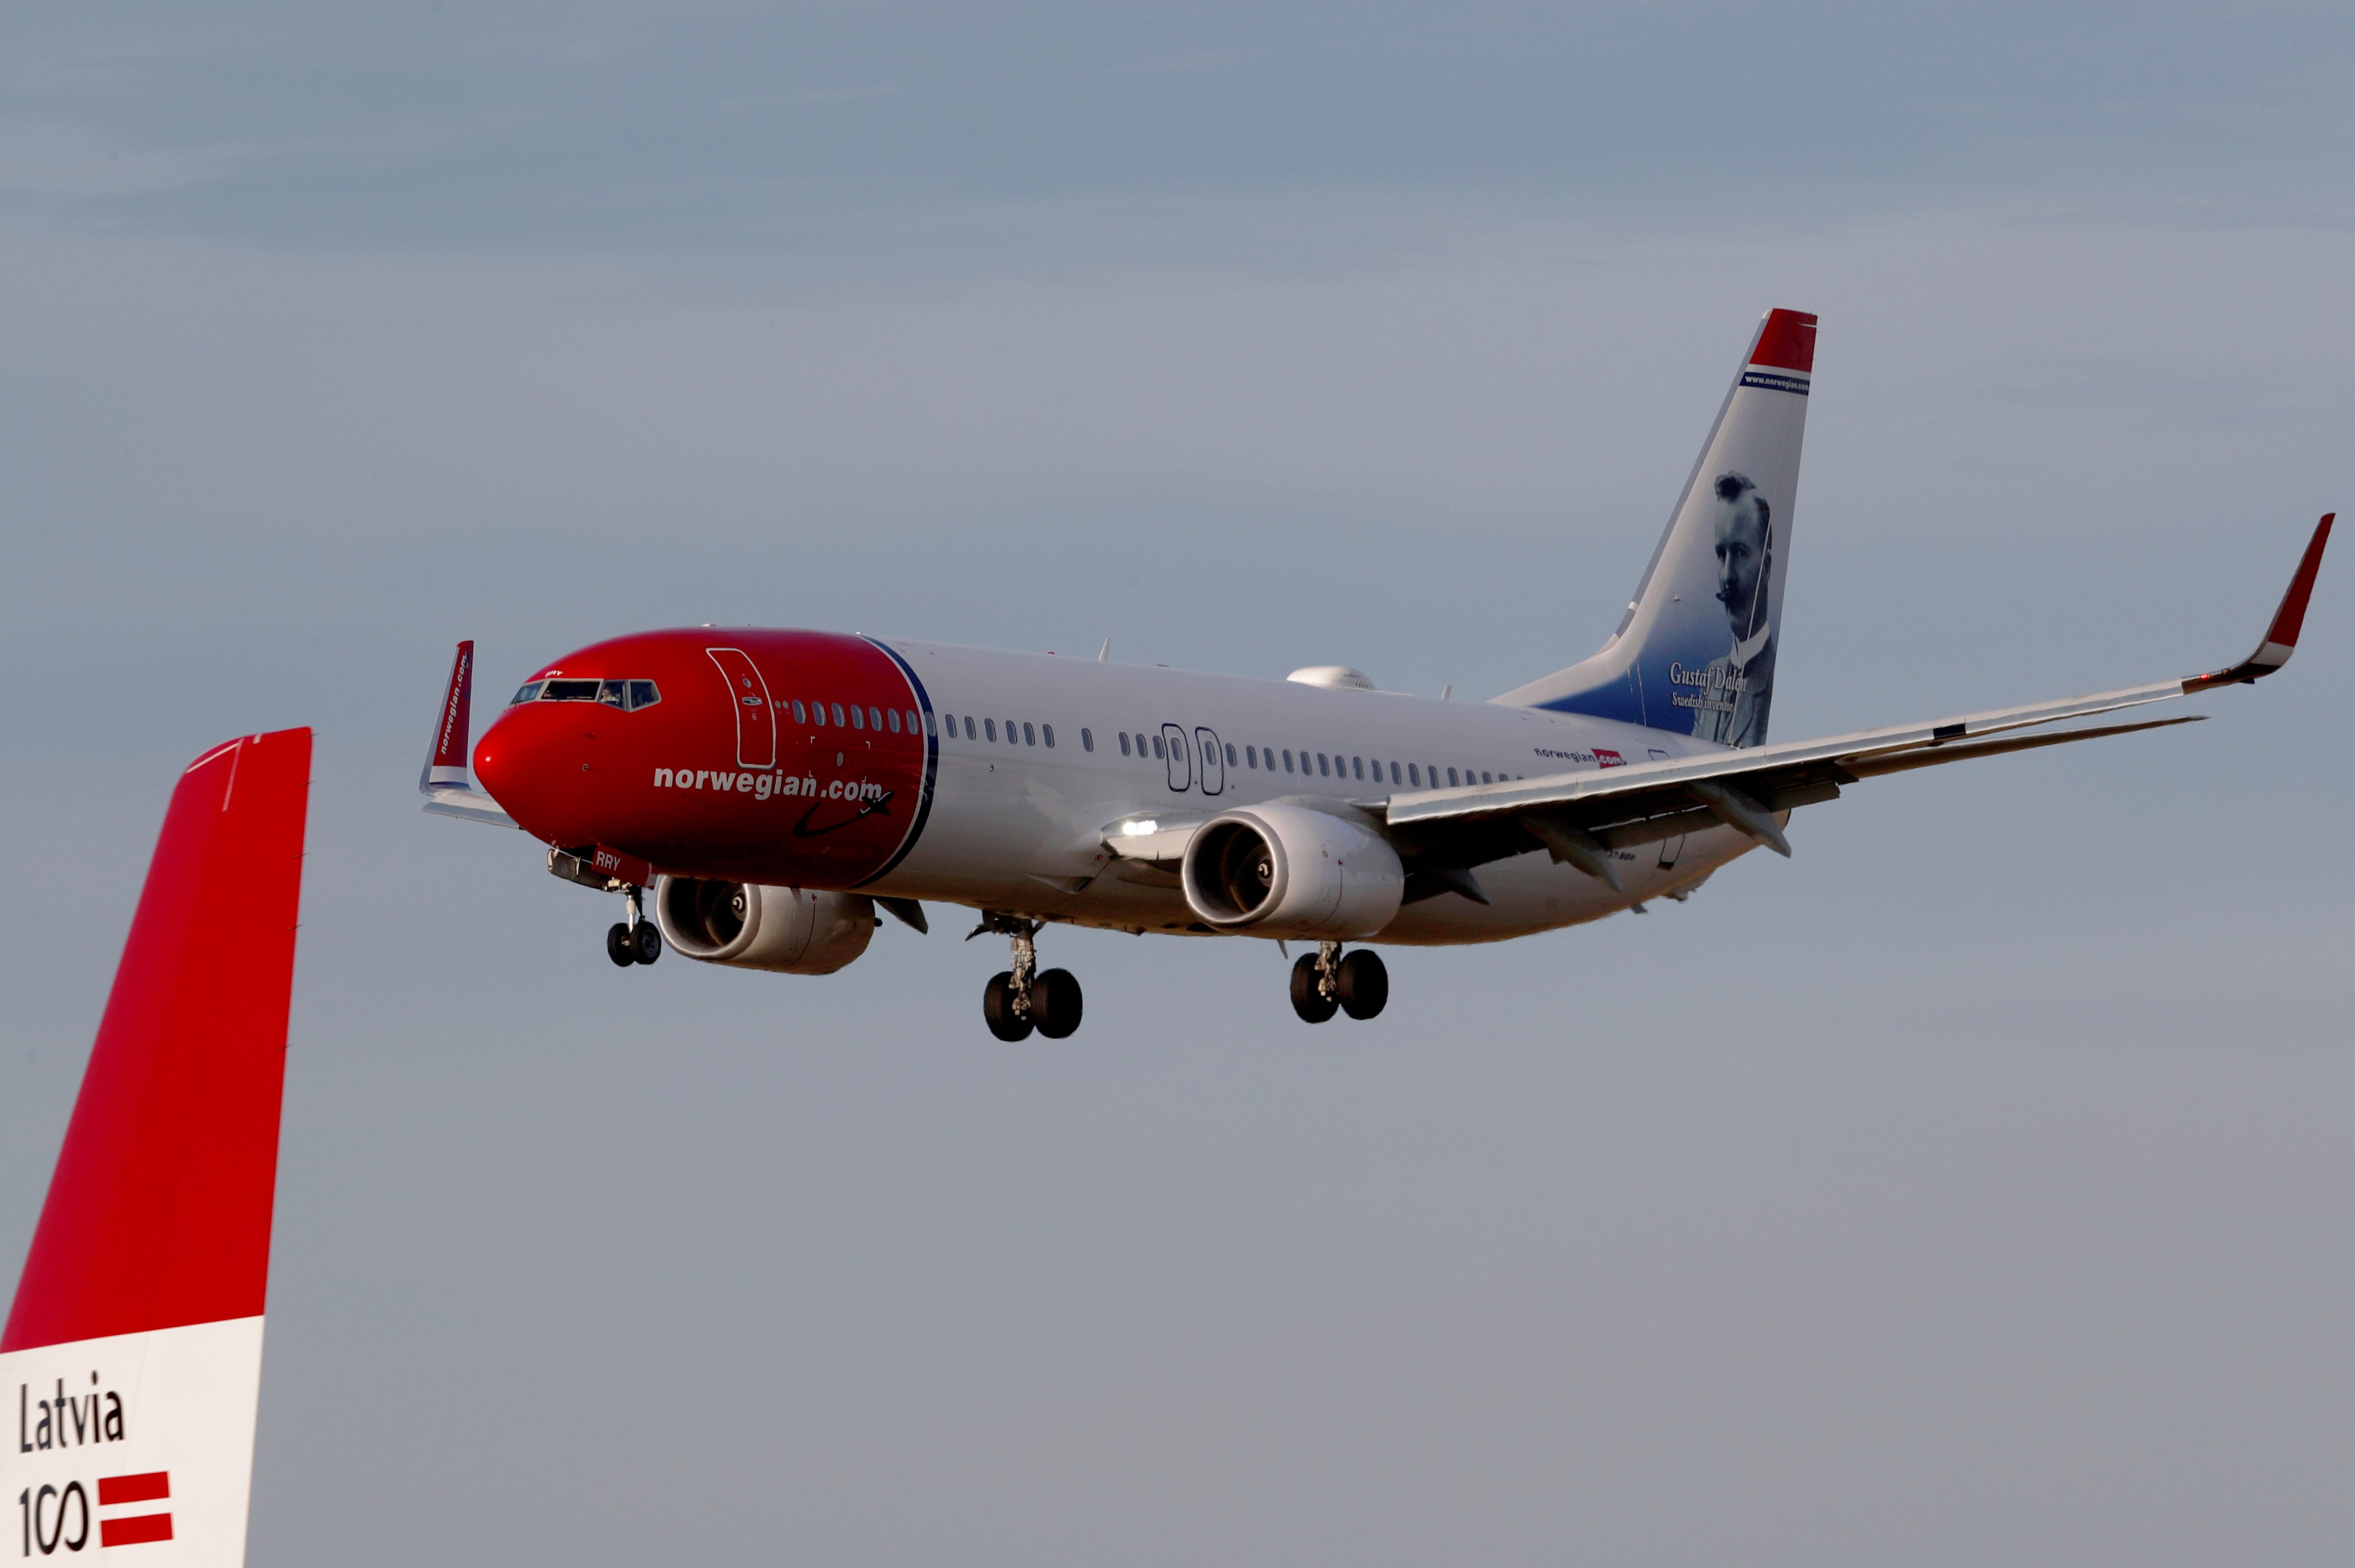 Irish court grants extension to Norwegian Air’s debt restructuring